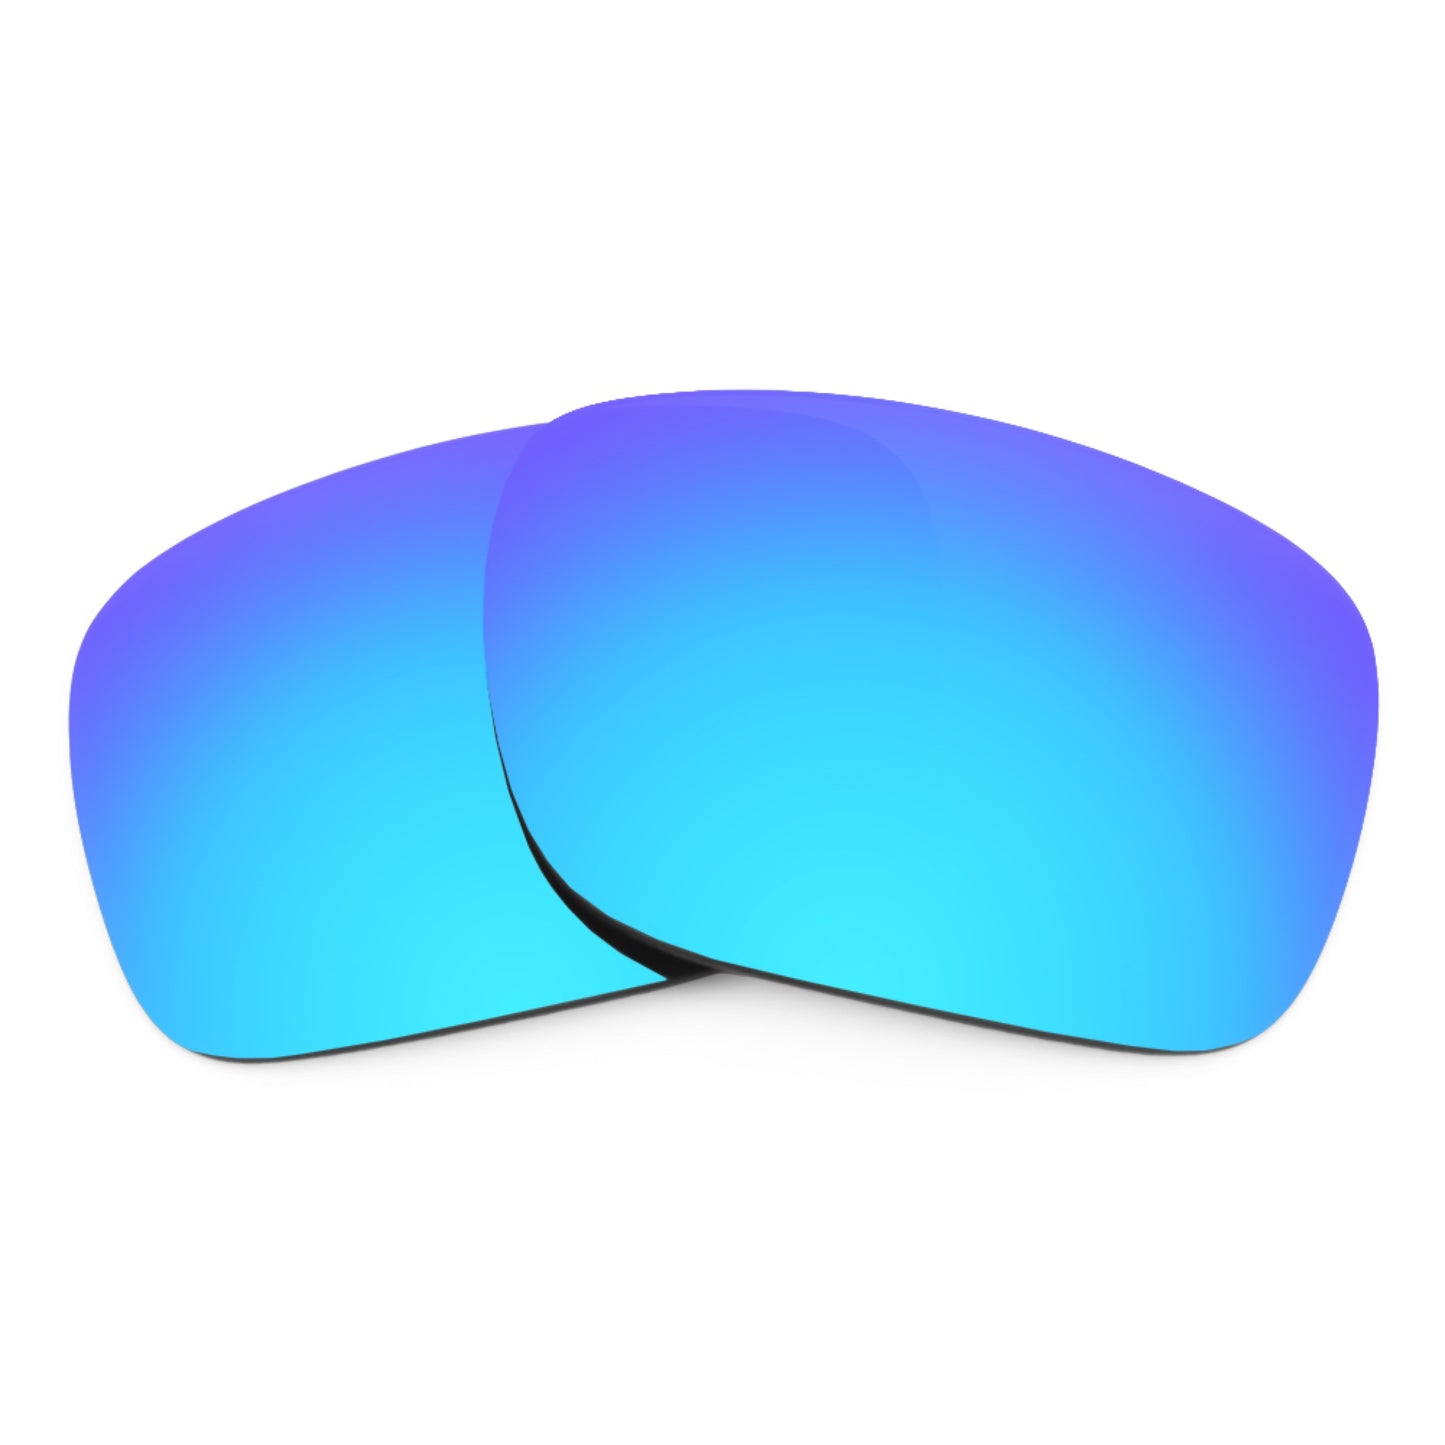 Revant replacement lenses for Oakley TwoFace (Low Bridge Fit) Non-Polarized Ice Blue